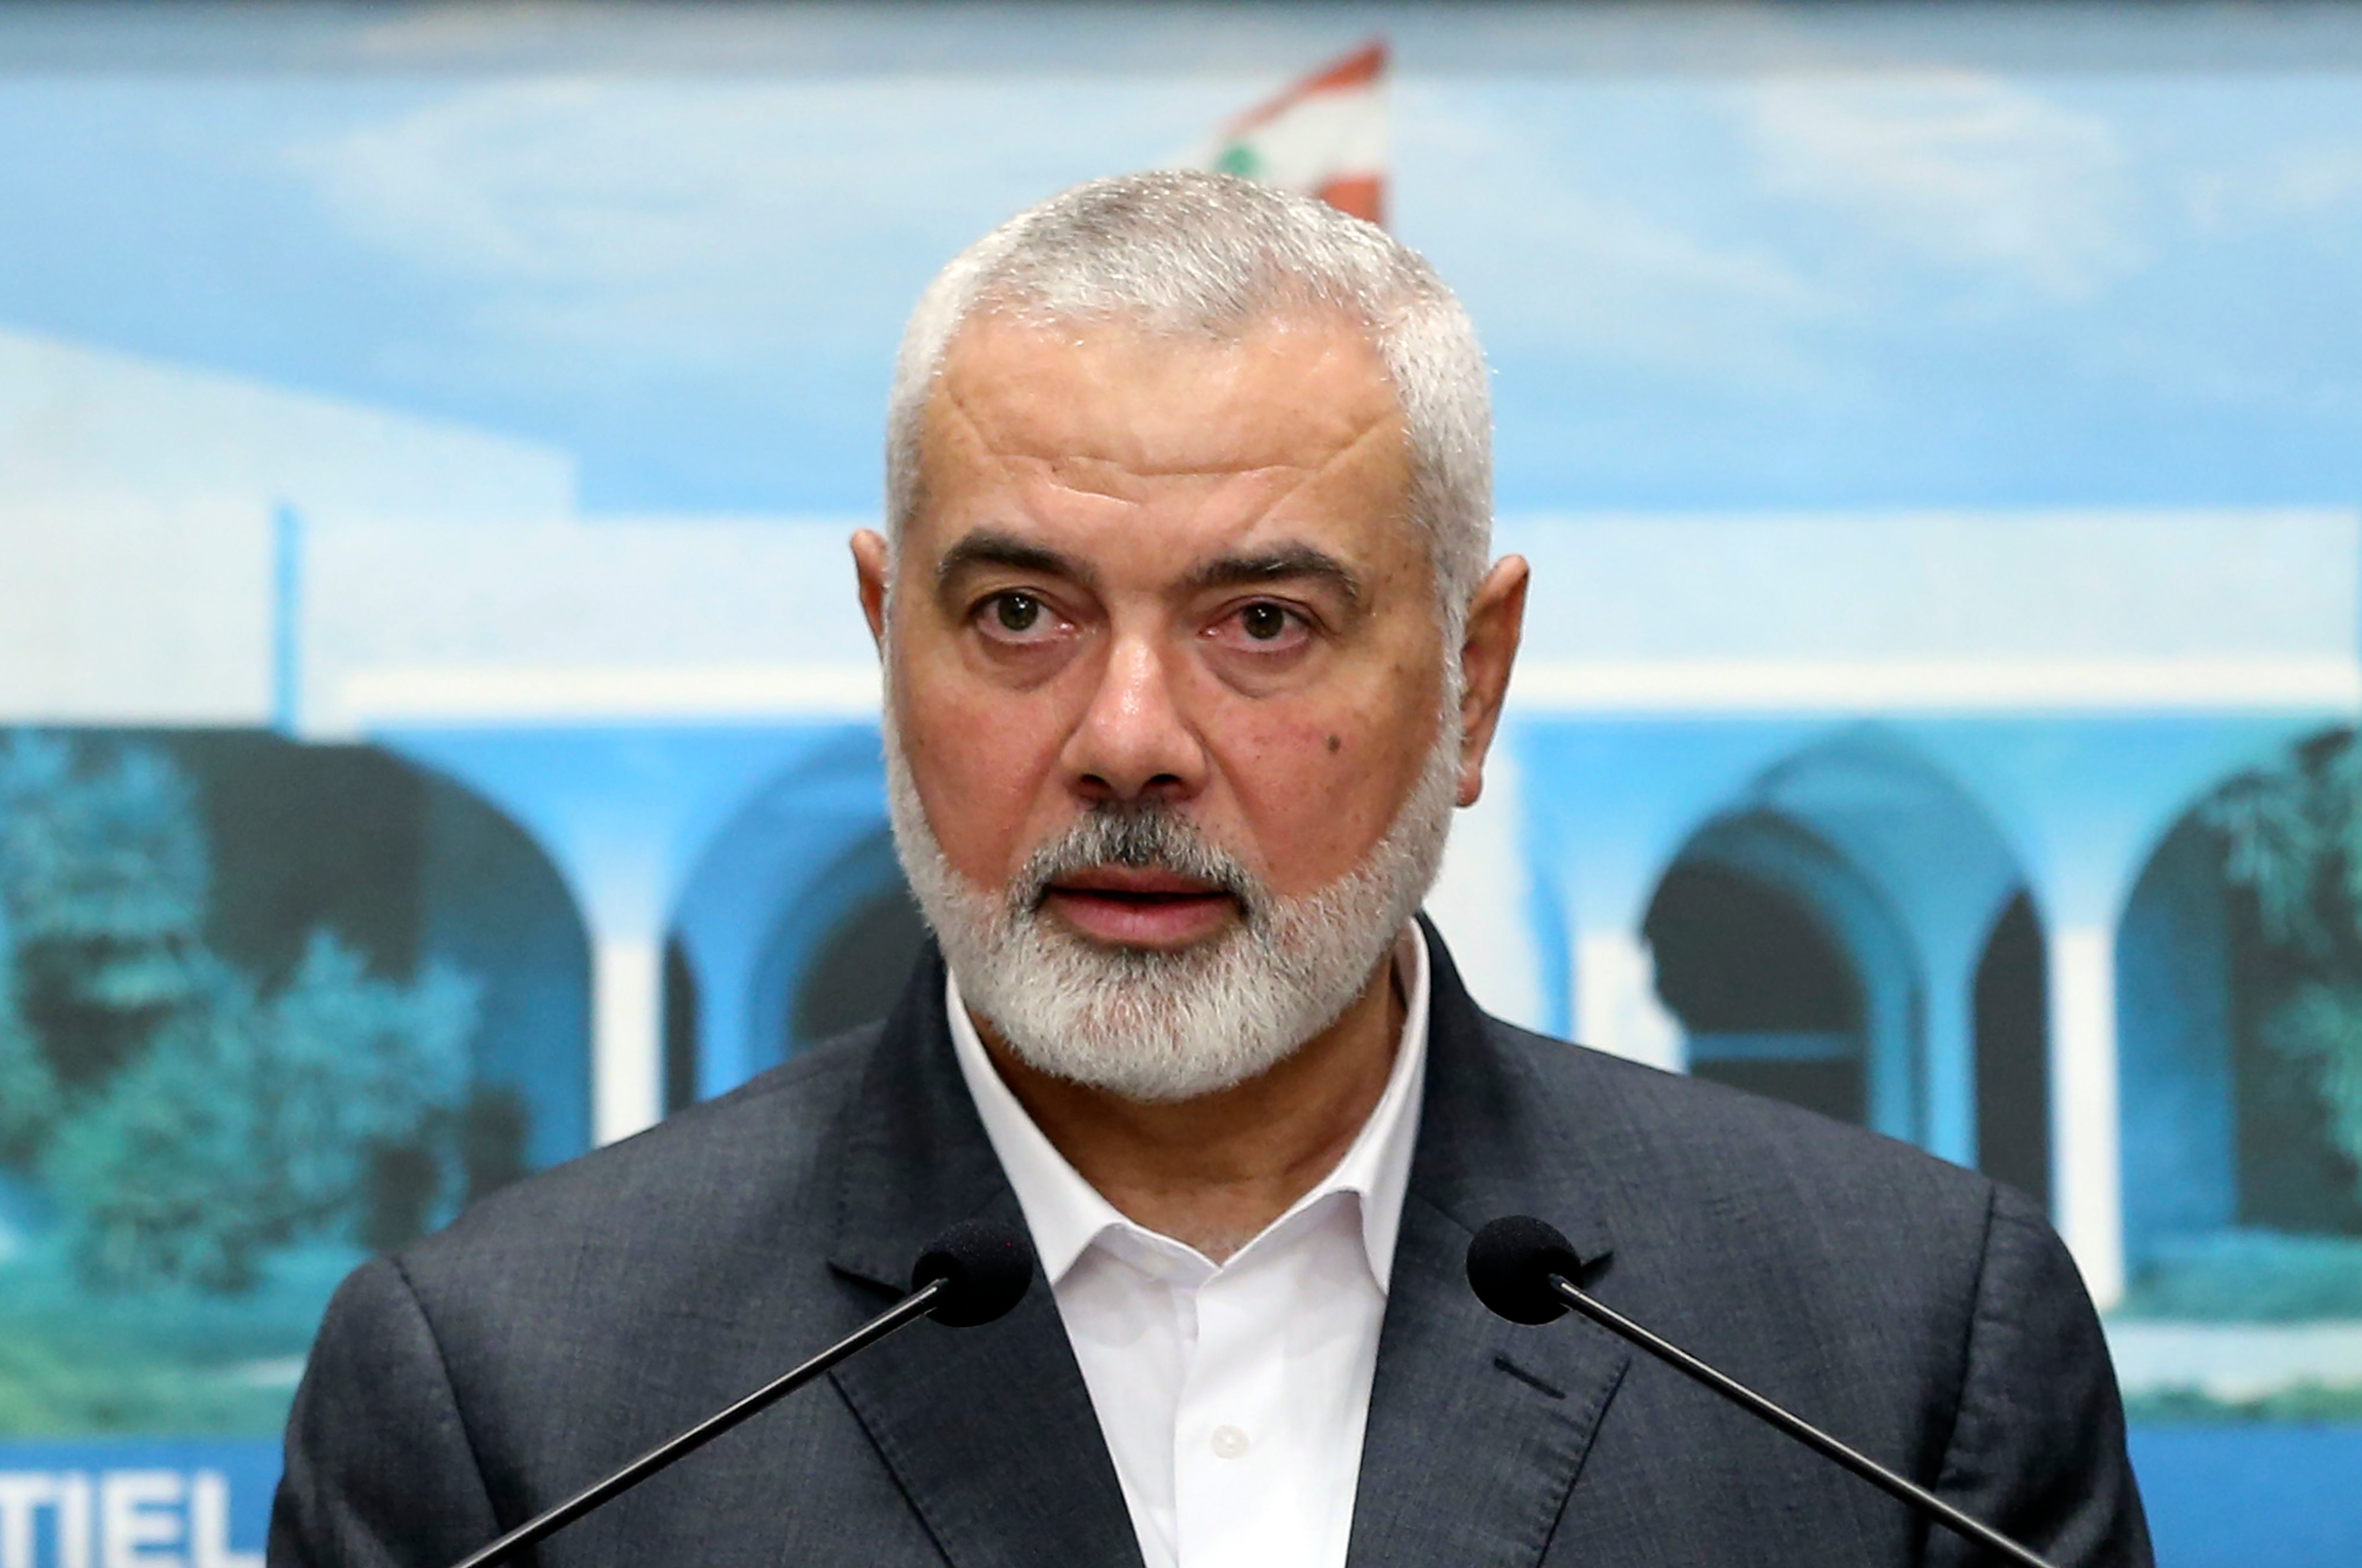 Hamas leader Ismail Haniyeh lost three sons in Gaza